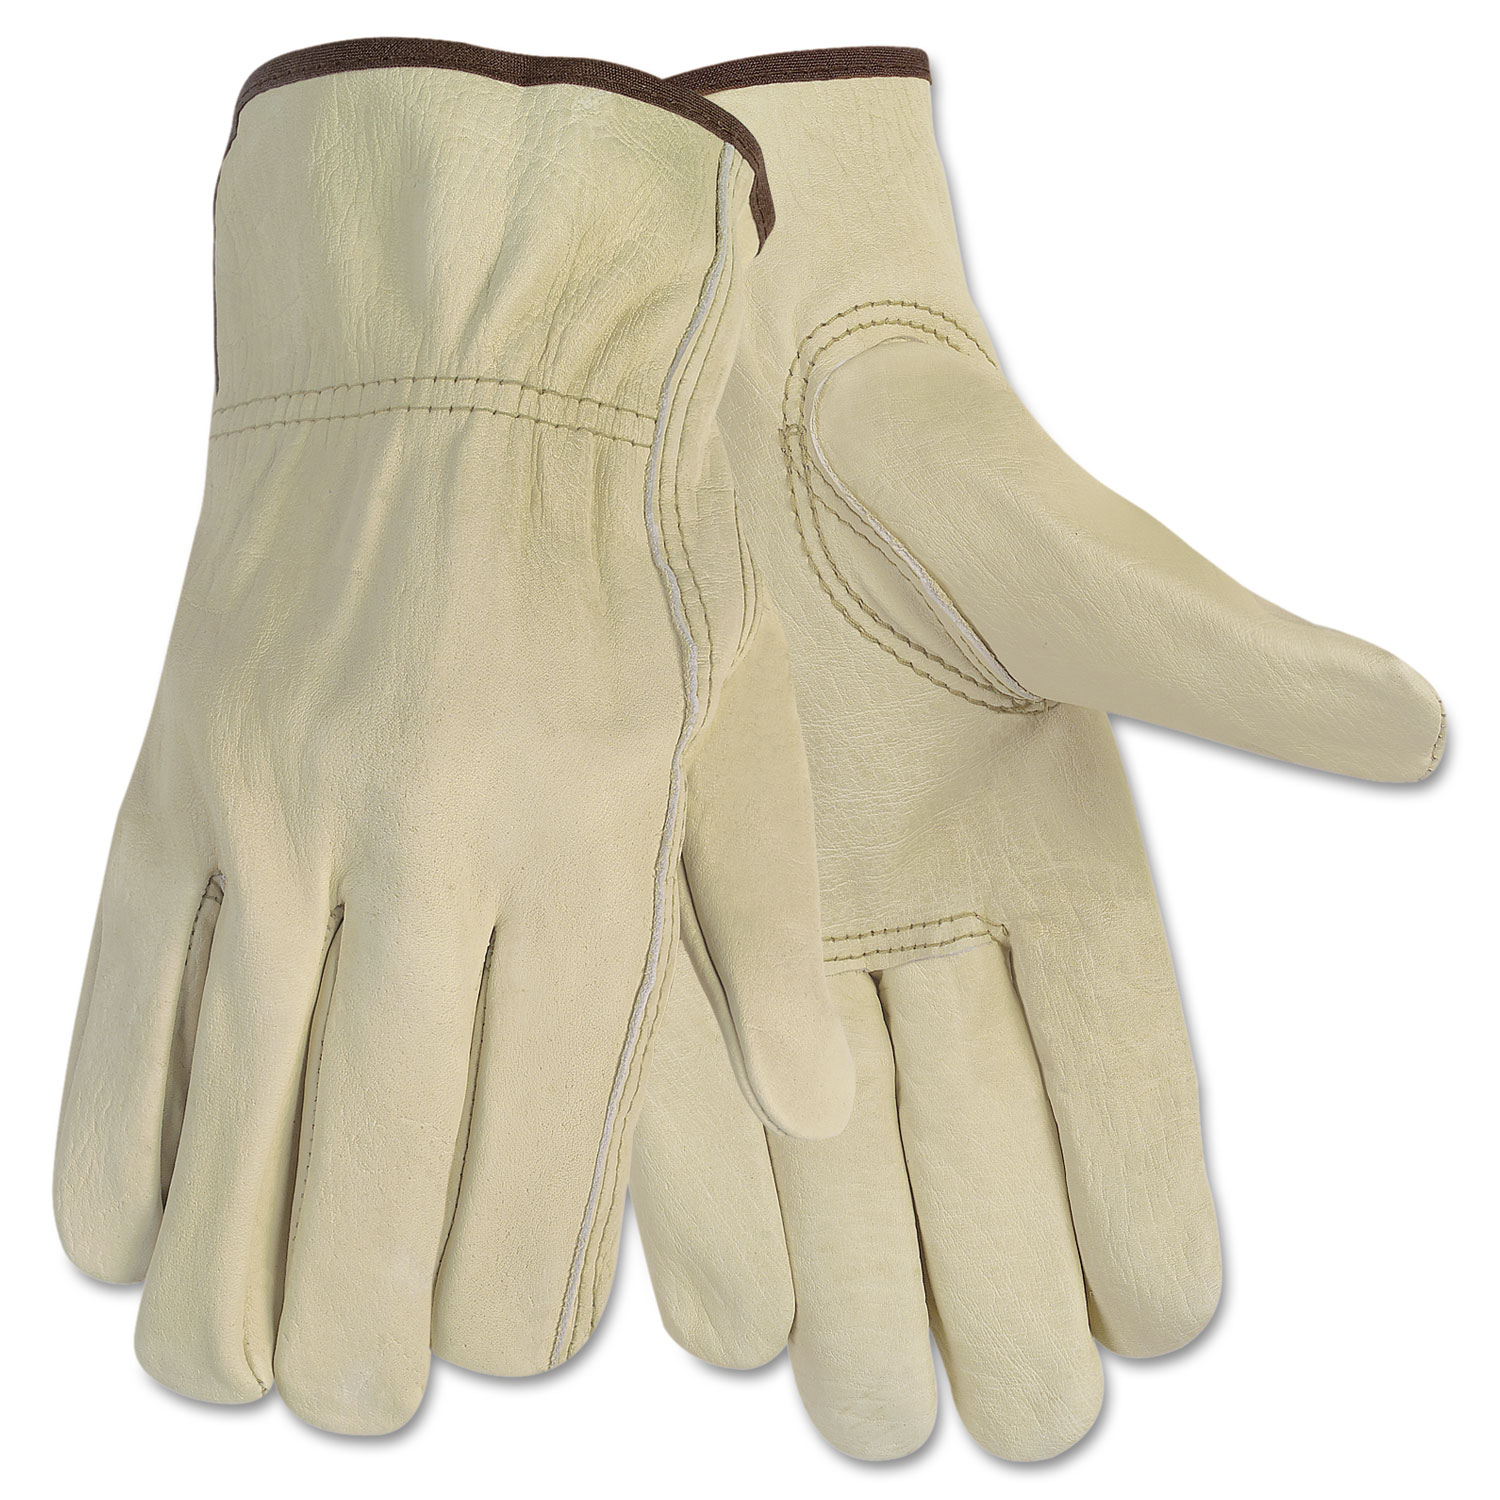 Economy Leather Driver Gloves, Medium, Beige, Pair